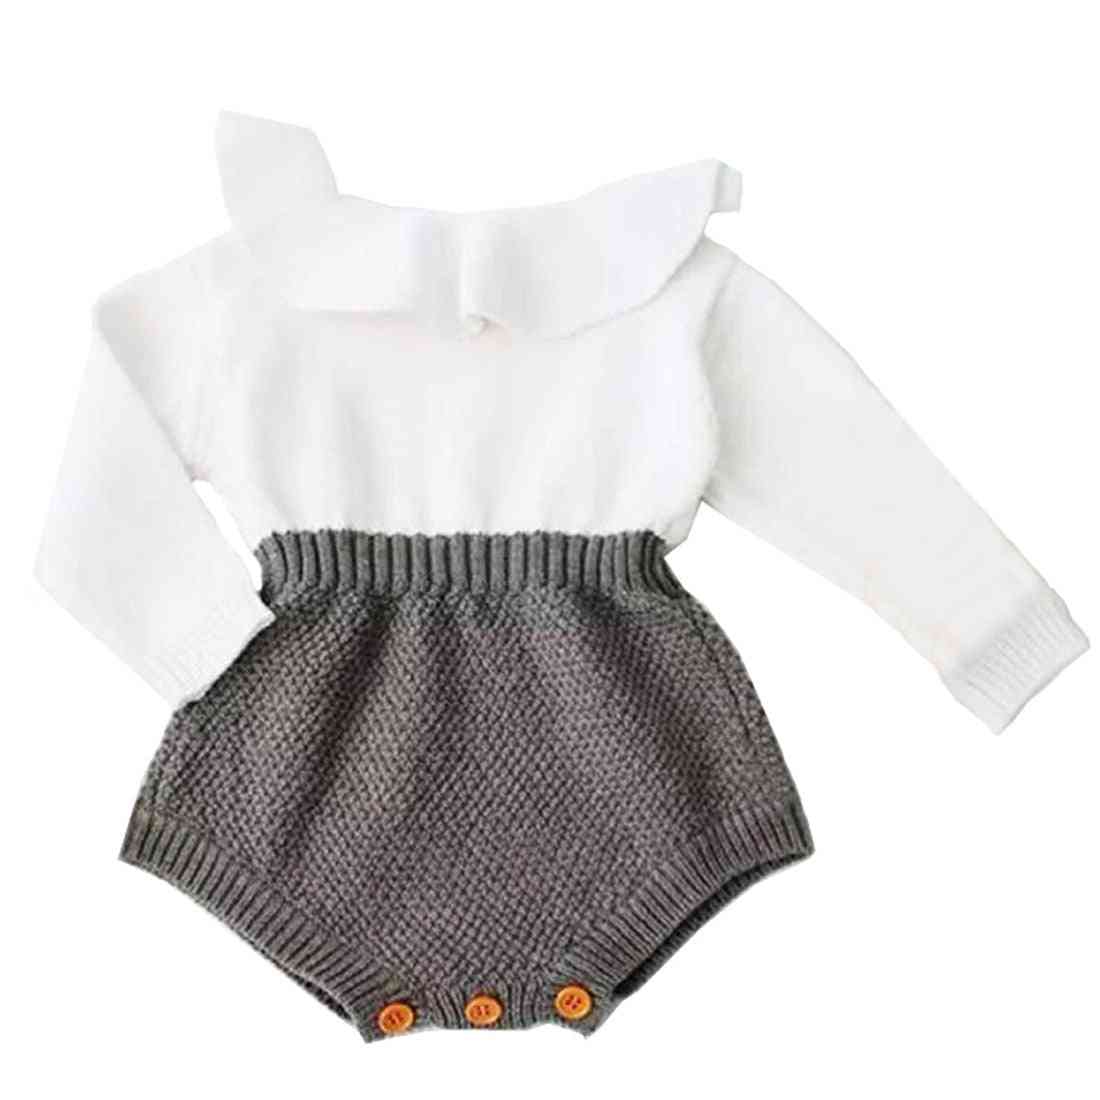 Neugeborene Babykleidung Strampler Wollstrickoberteile Langarm warme Outfits Kleidung